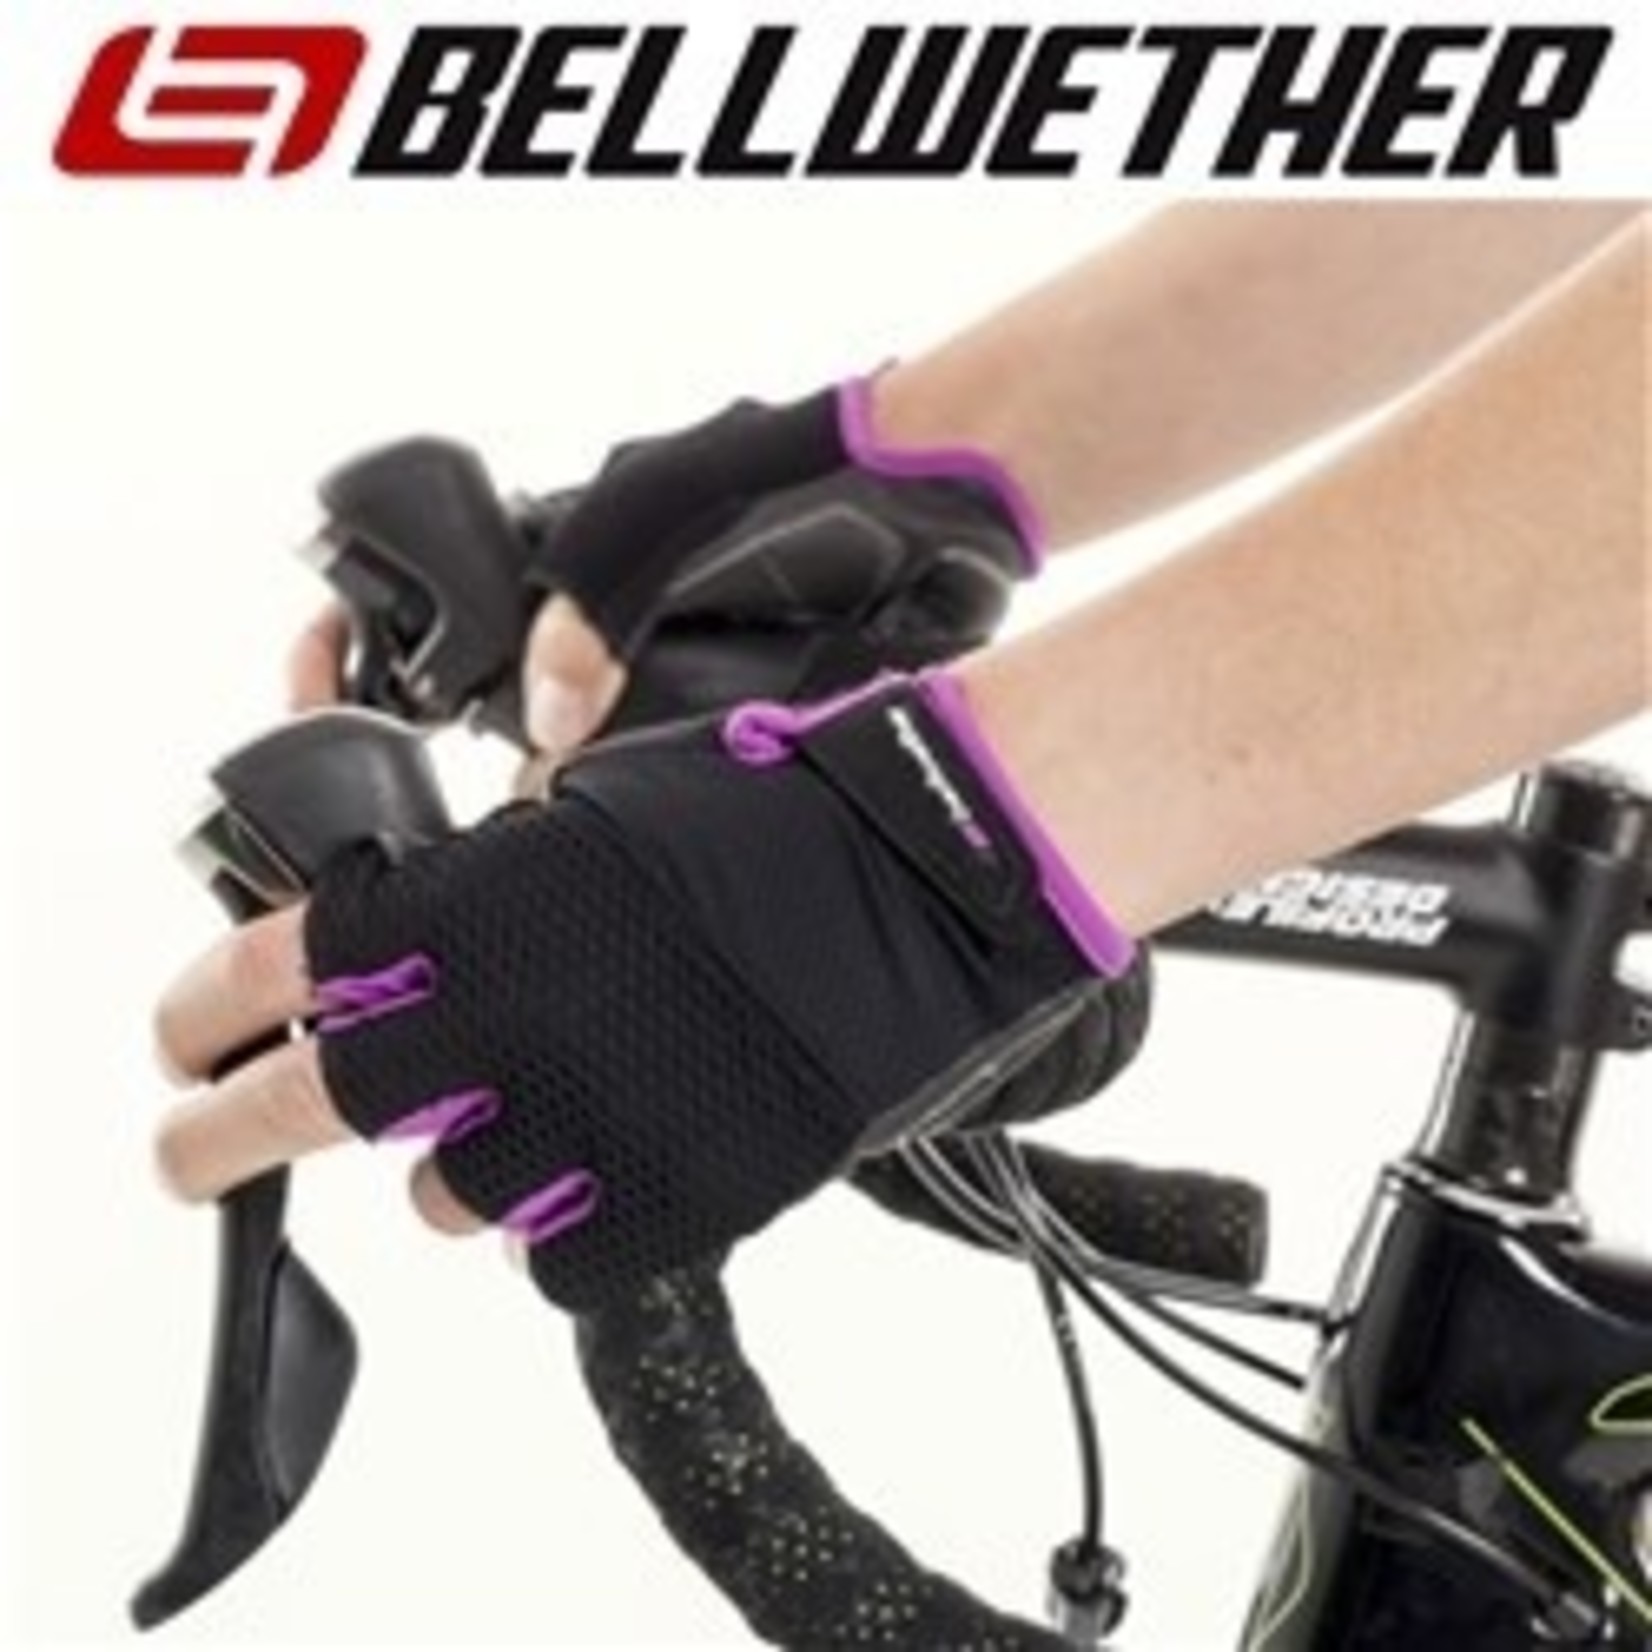 Bellwether Bellwether Cycling/Bike Gloves - Women's Gel Supreme - Fuschia